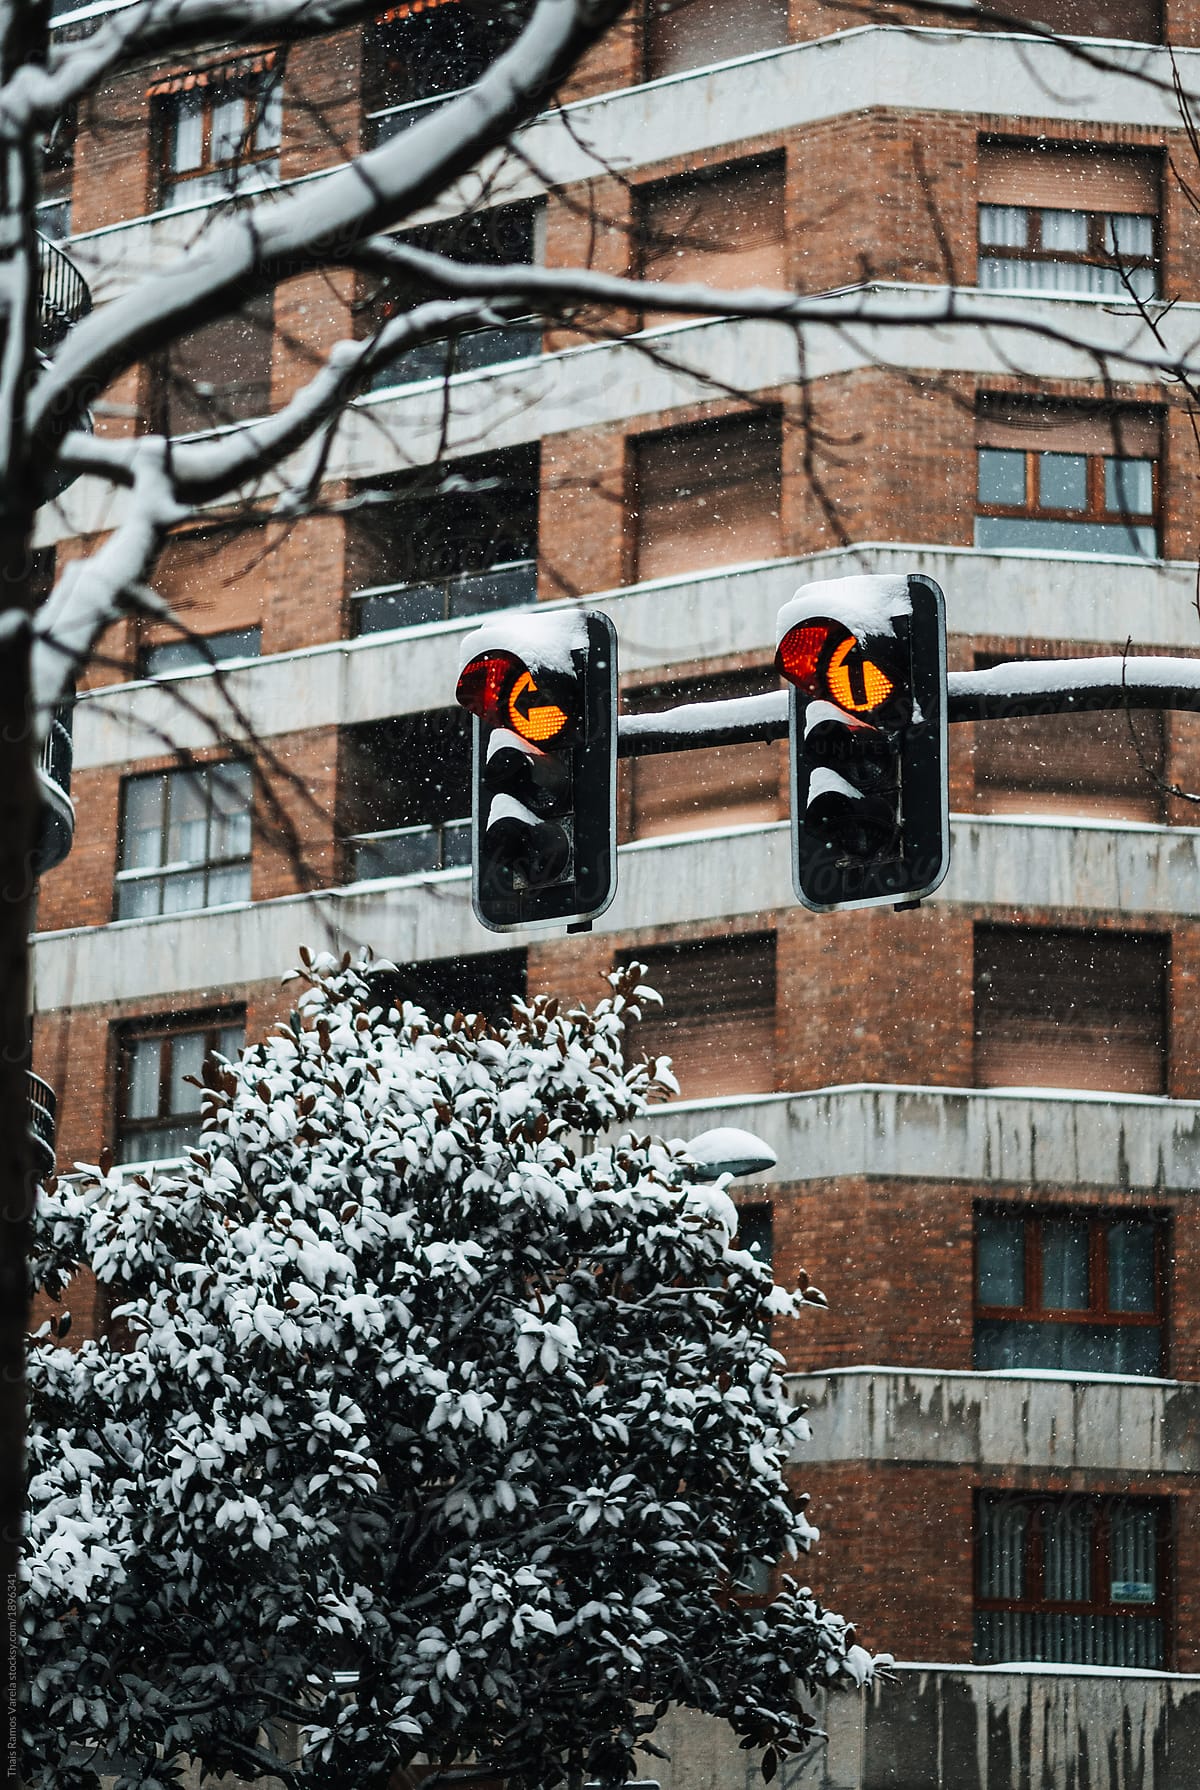 traffic light on a frozen city